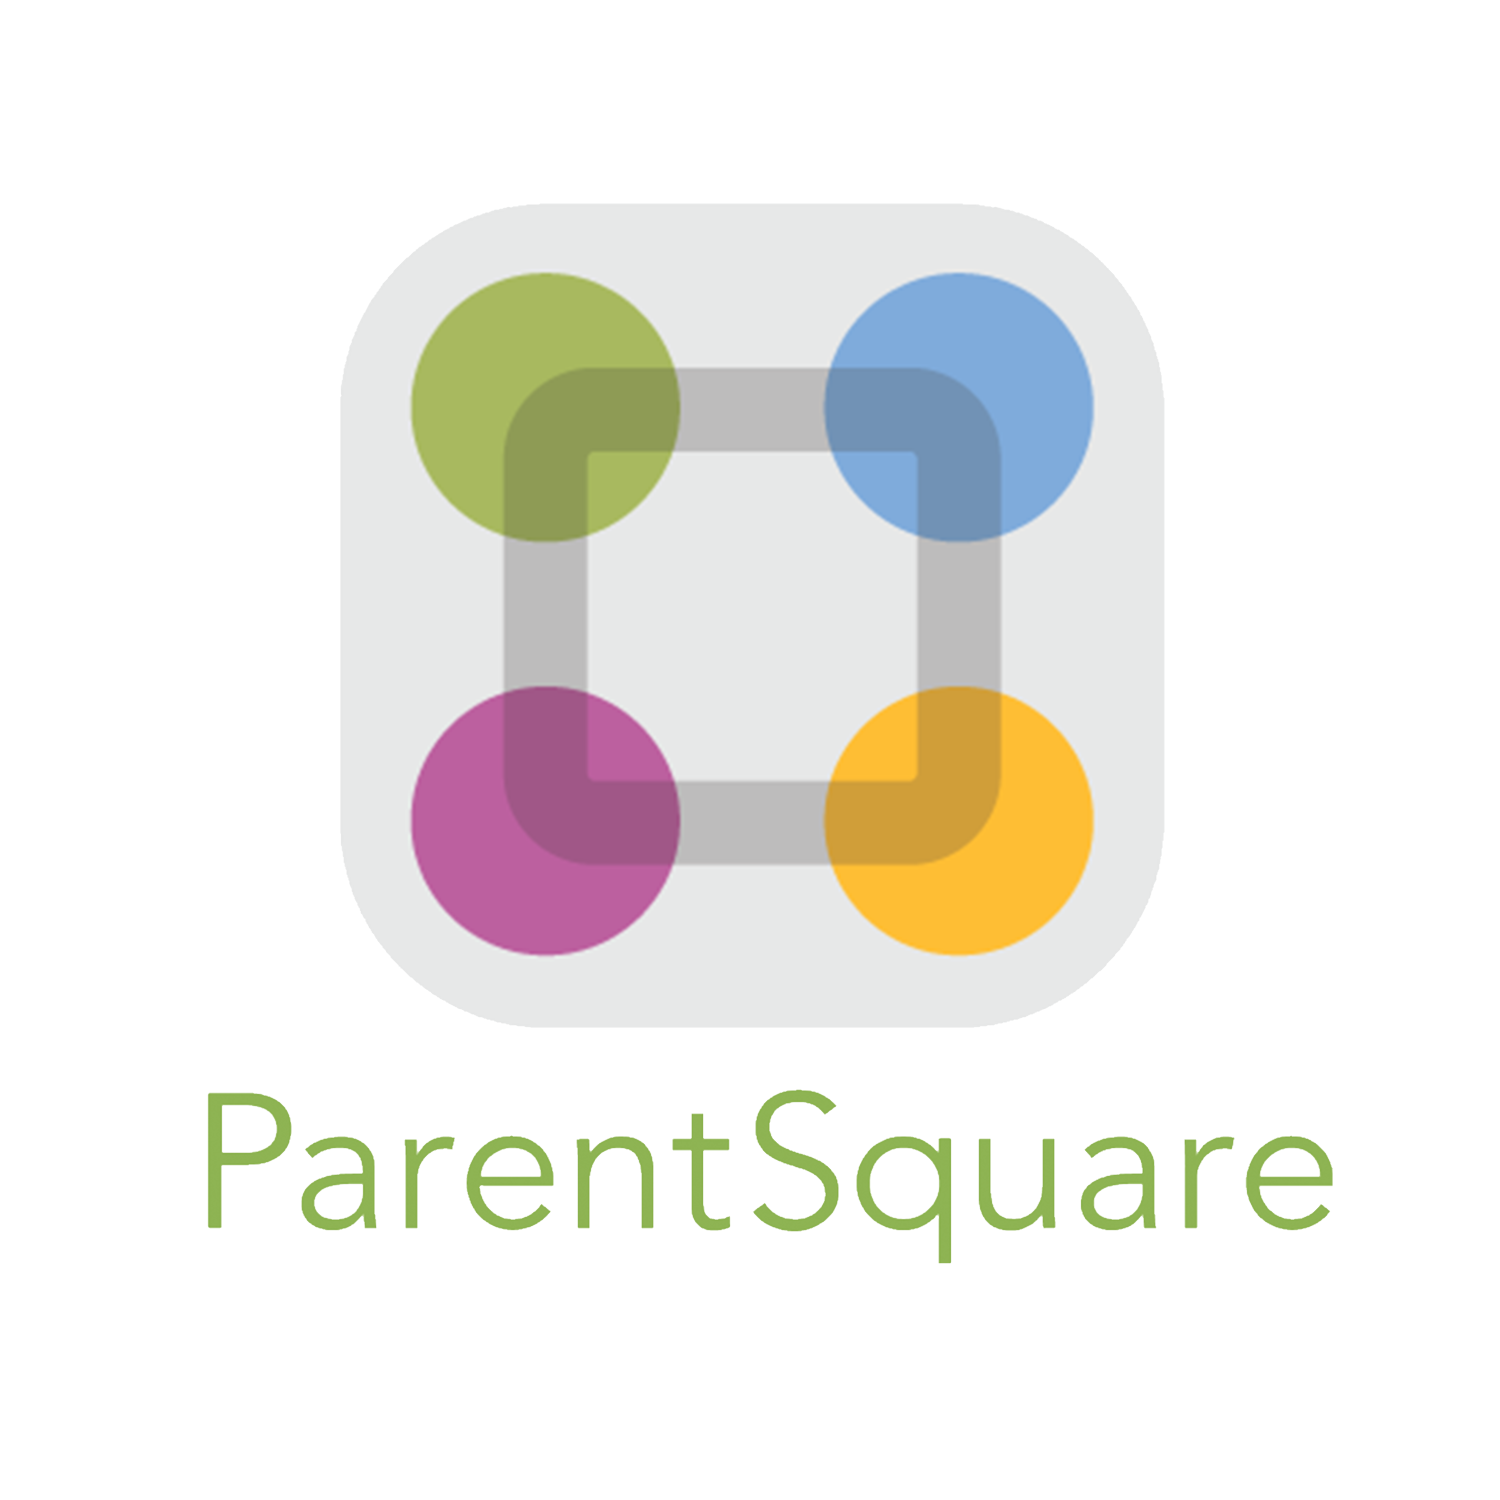 ParentSquare Introduction Video English Image